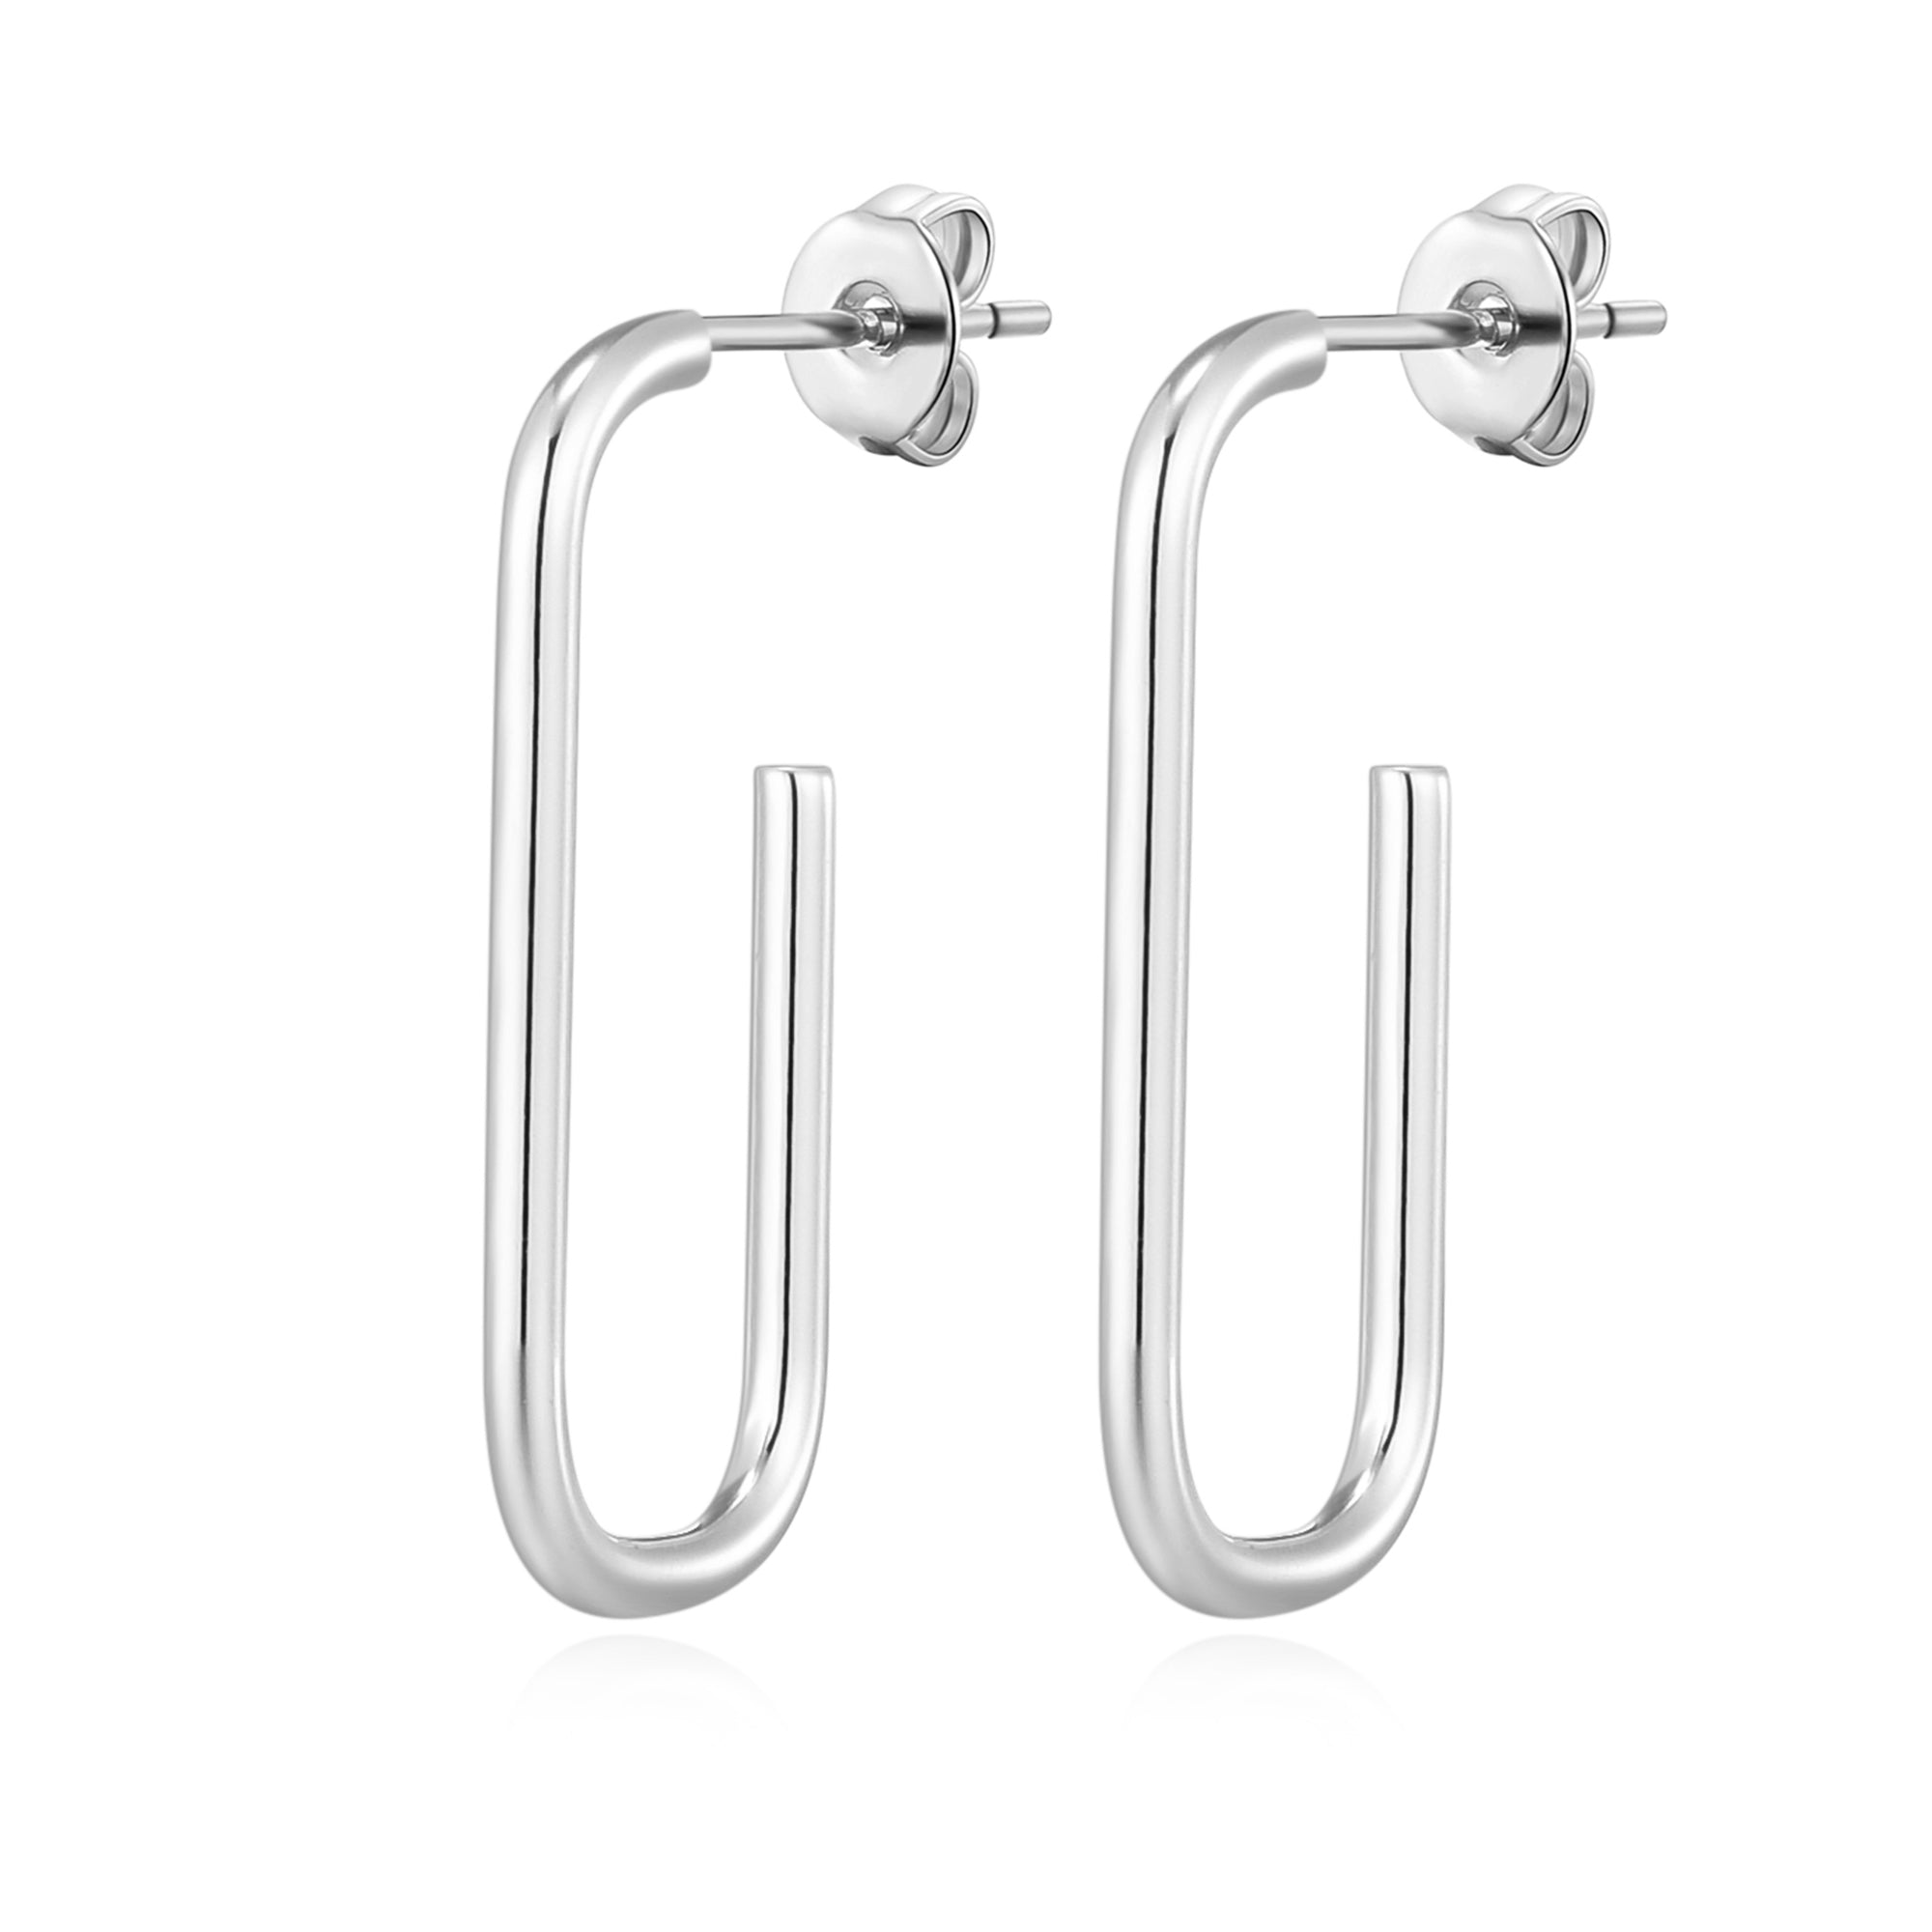 Silver Plated Rectangle Hoop Earrings by Philip Jones Jewellery